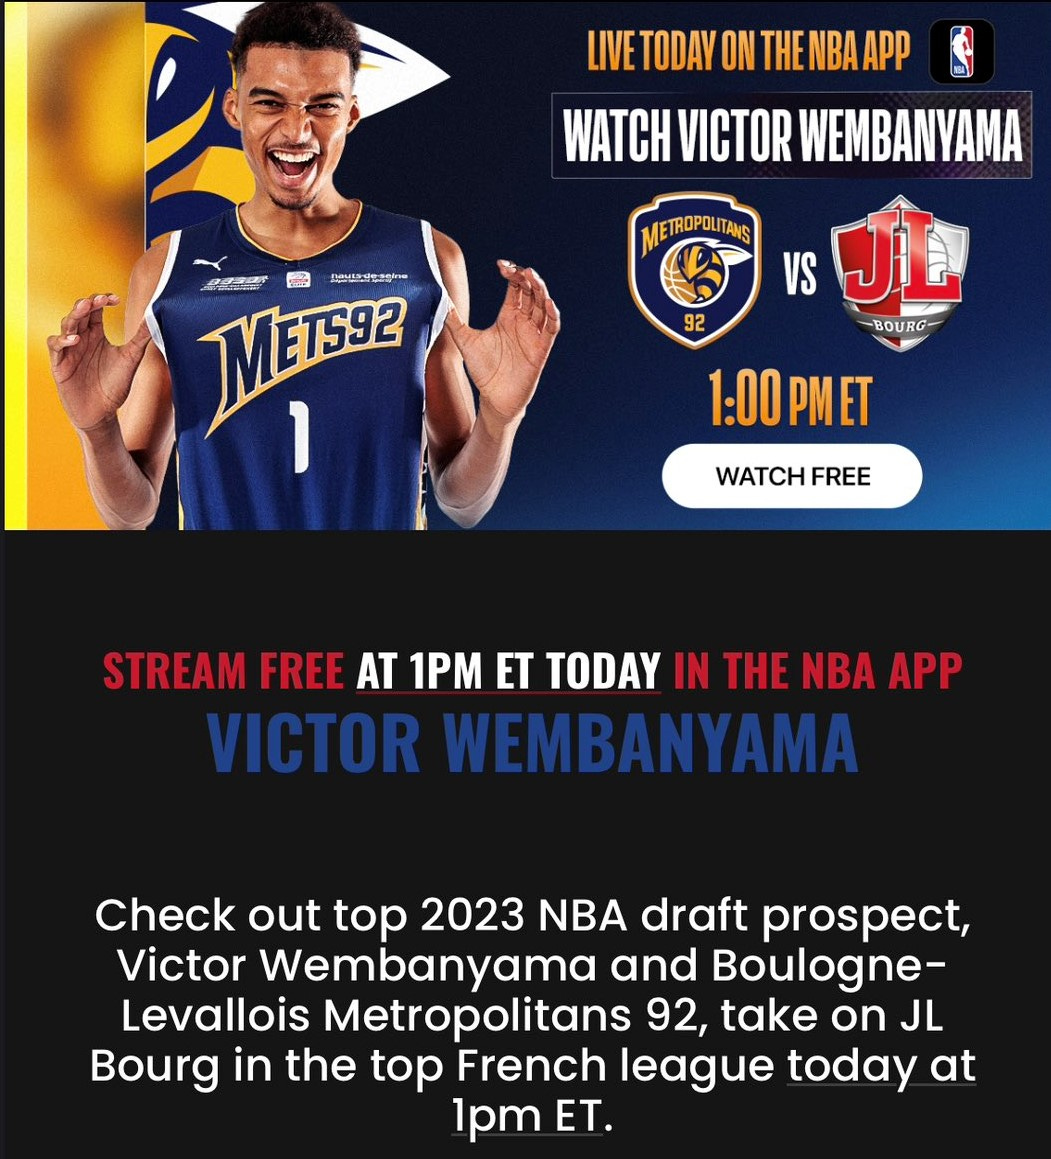 Meet Victor Wembanyama, the top prize of the 2023 NBA draft